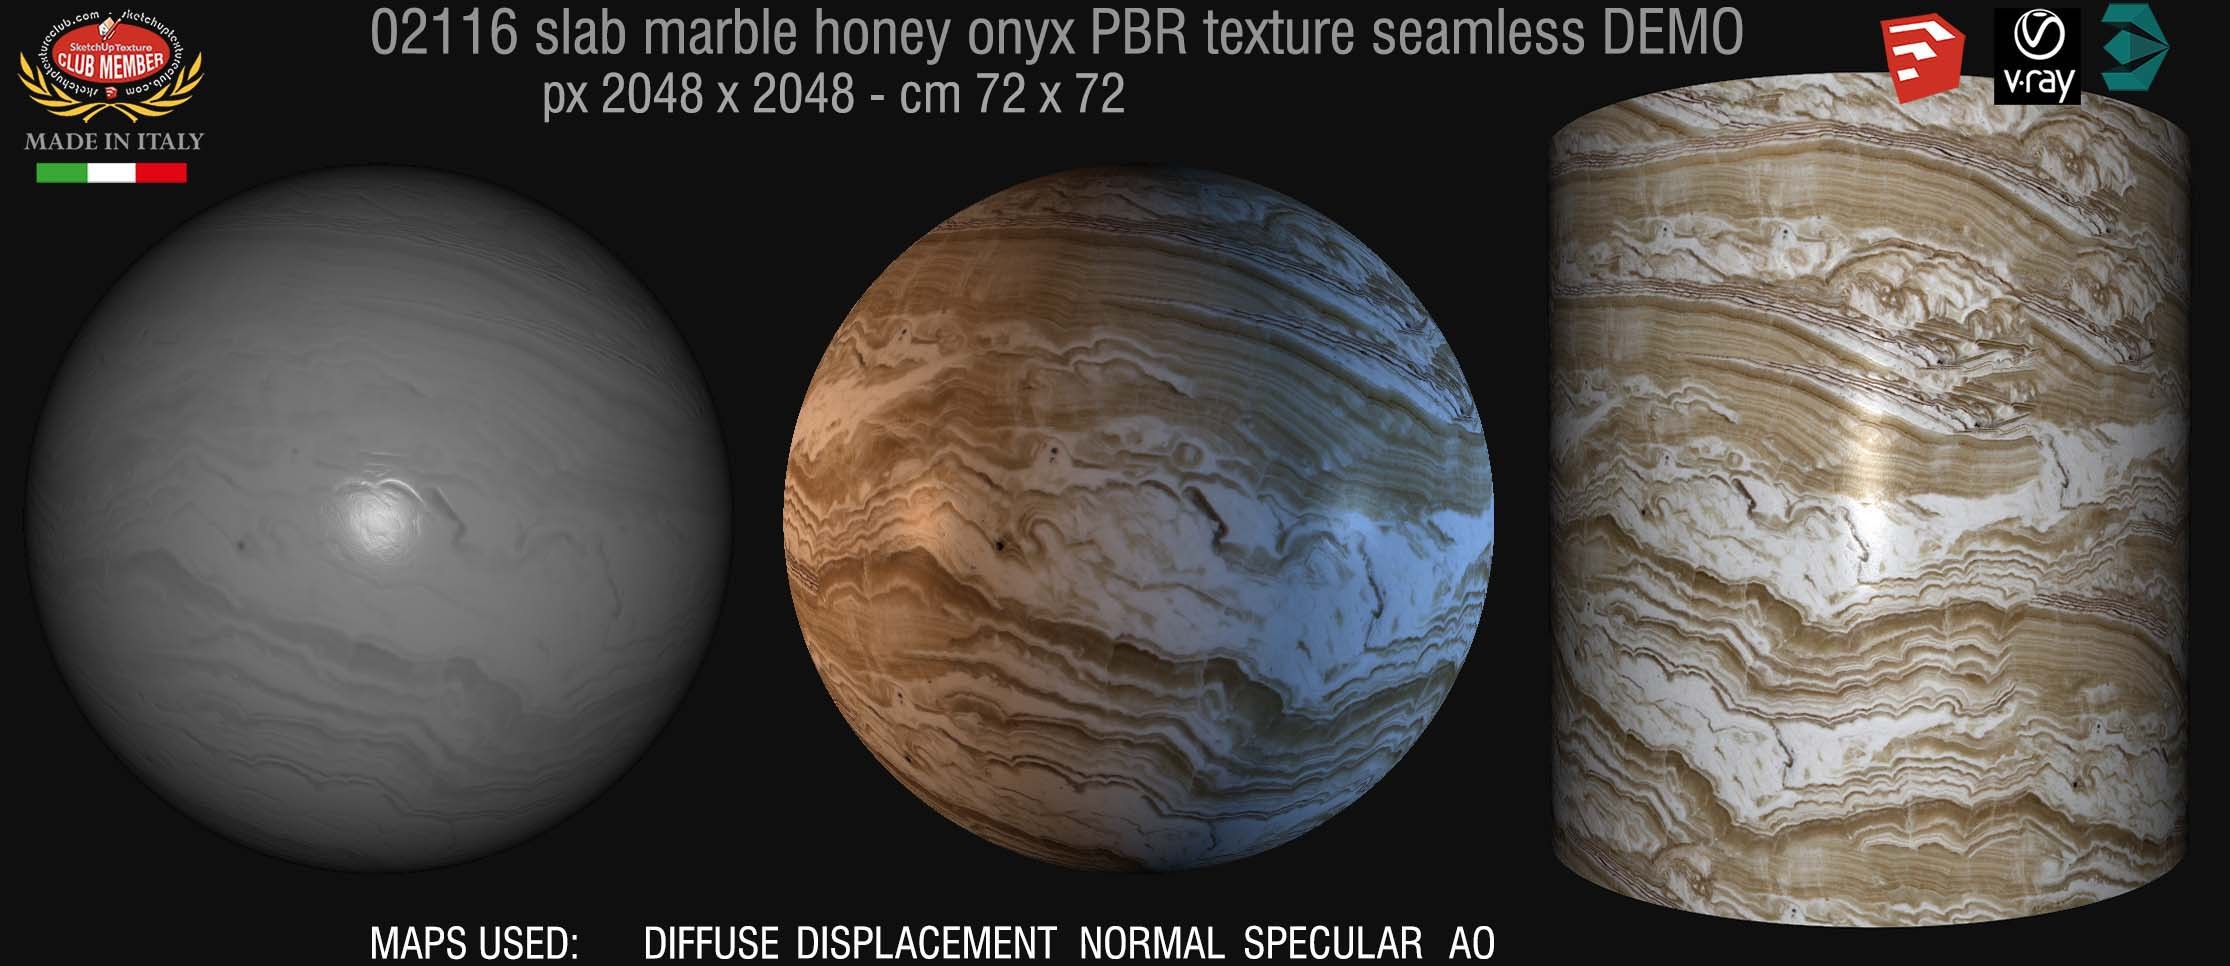 02116 slab marble honey onyx PBR texture seamless DEMO